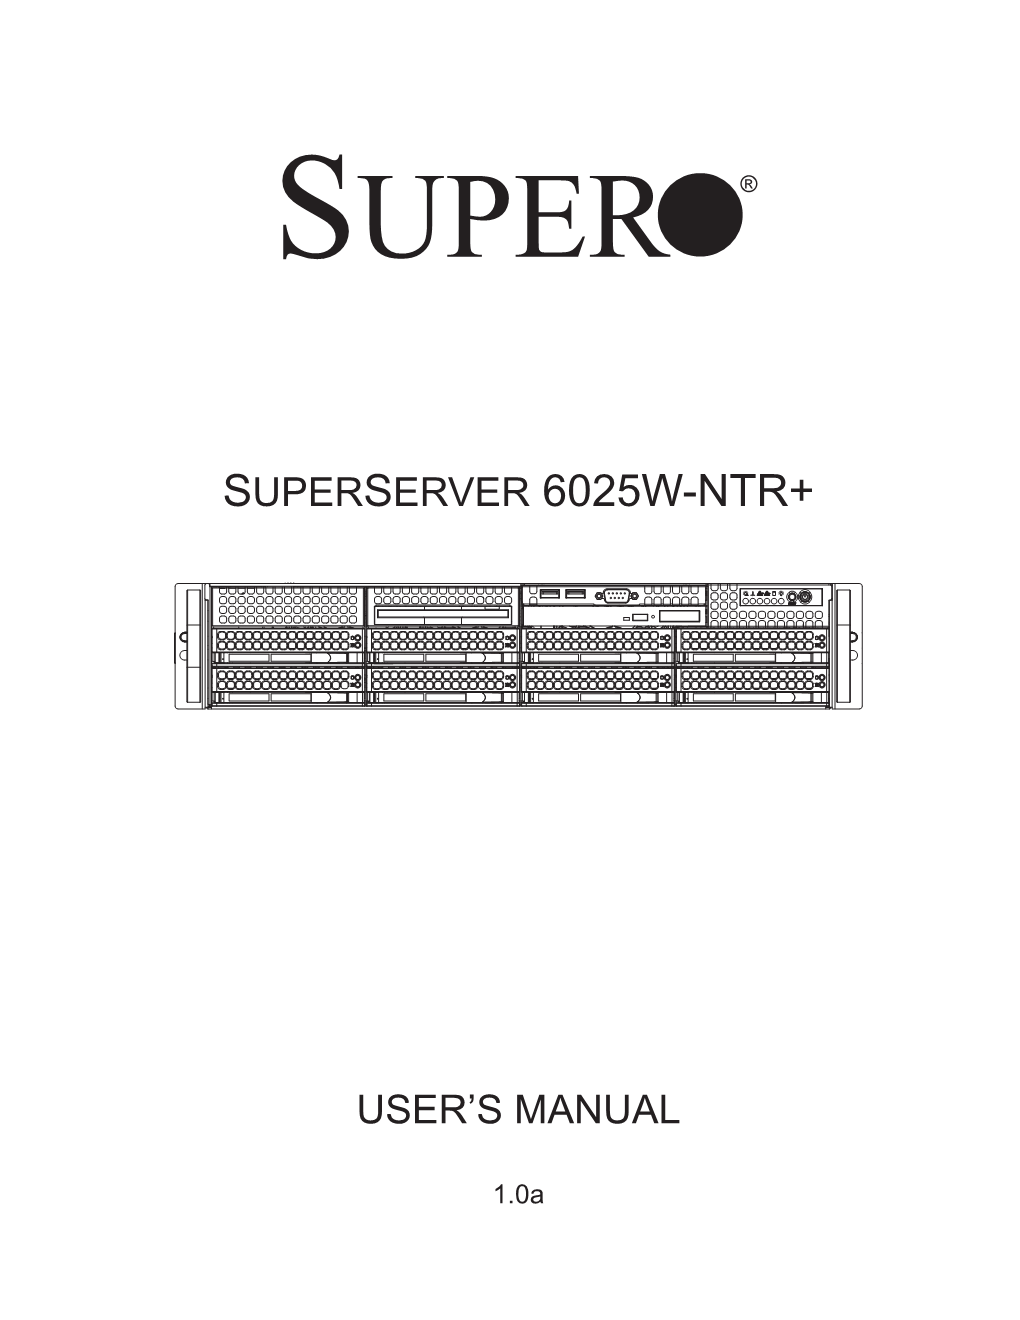 Superserver 6025W-Ntr+